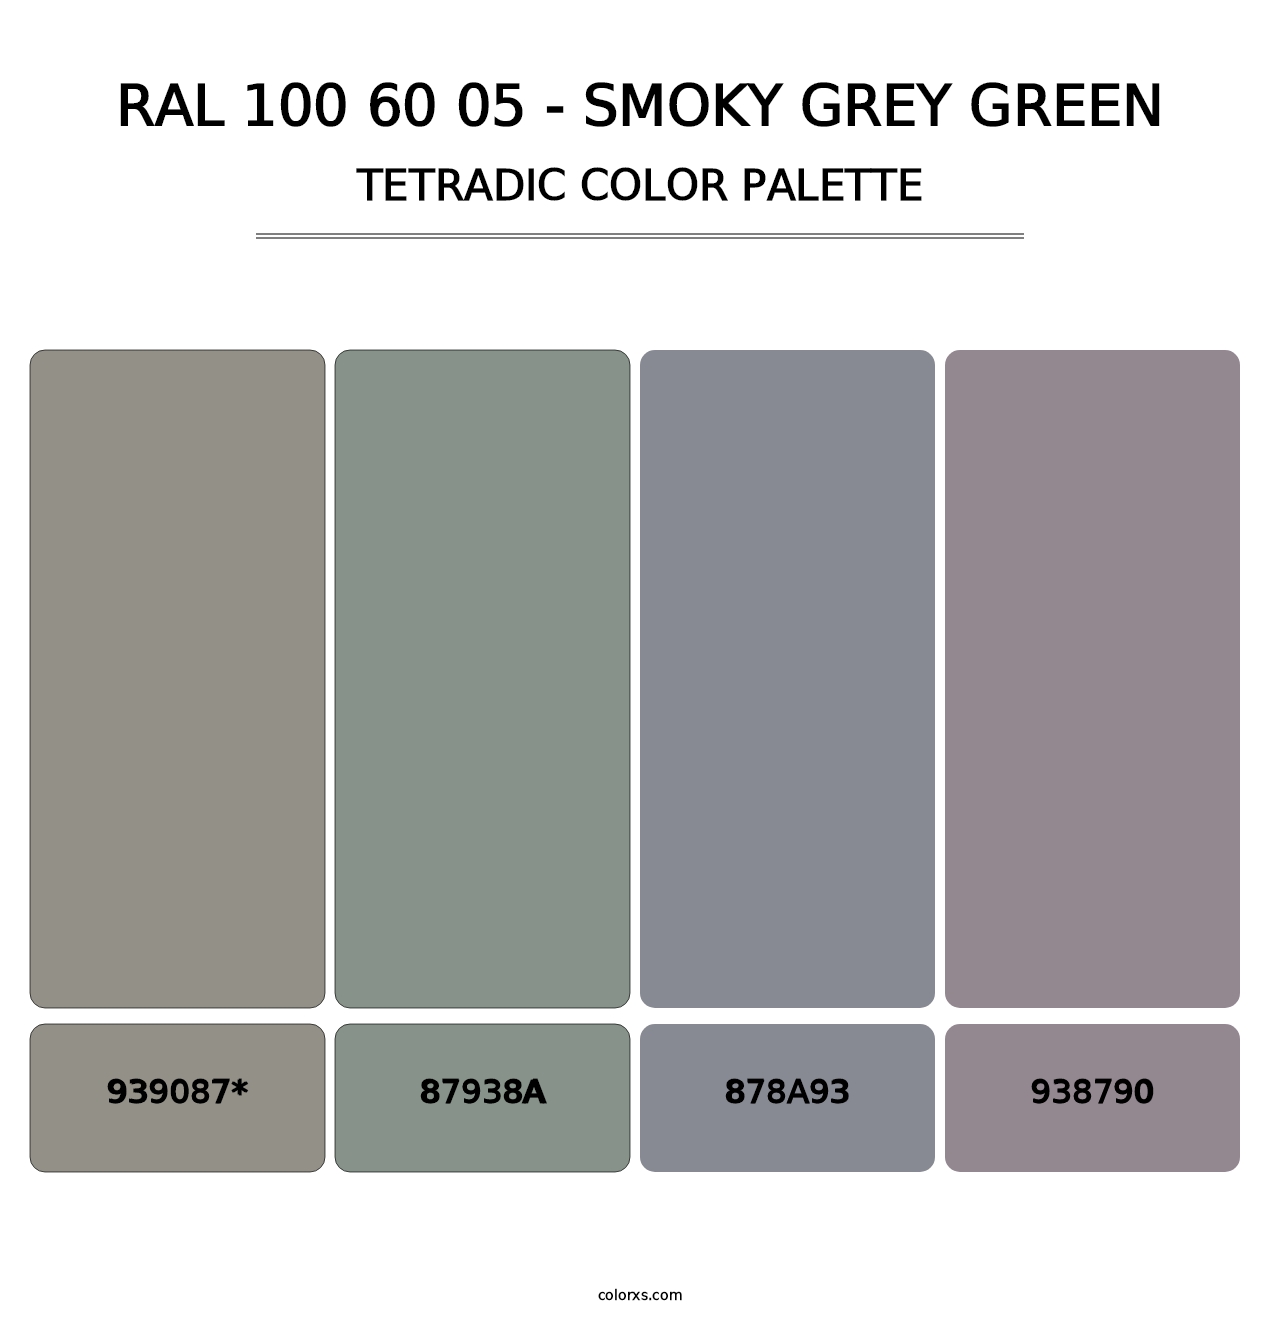 RAL 100 60 05 - Smoky Grey Green - Tetradic Color Palette